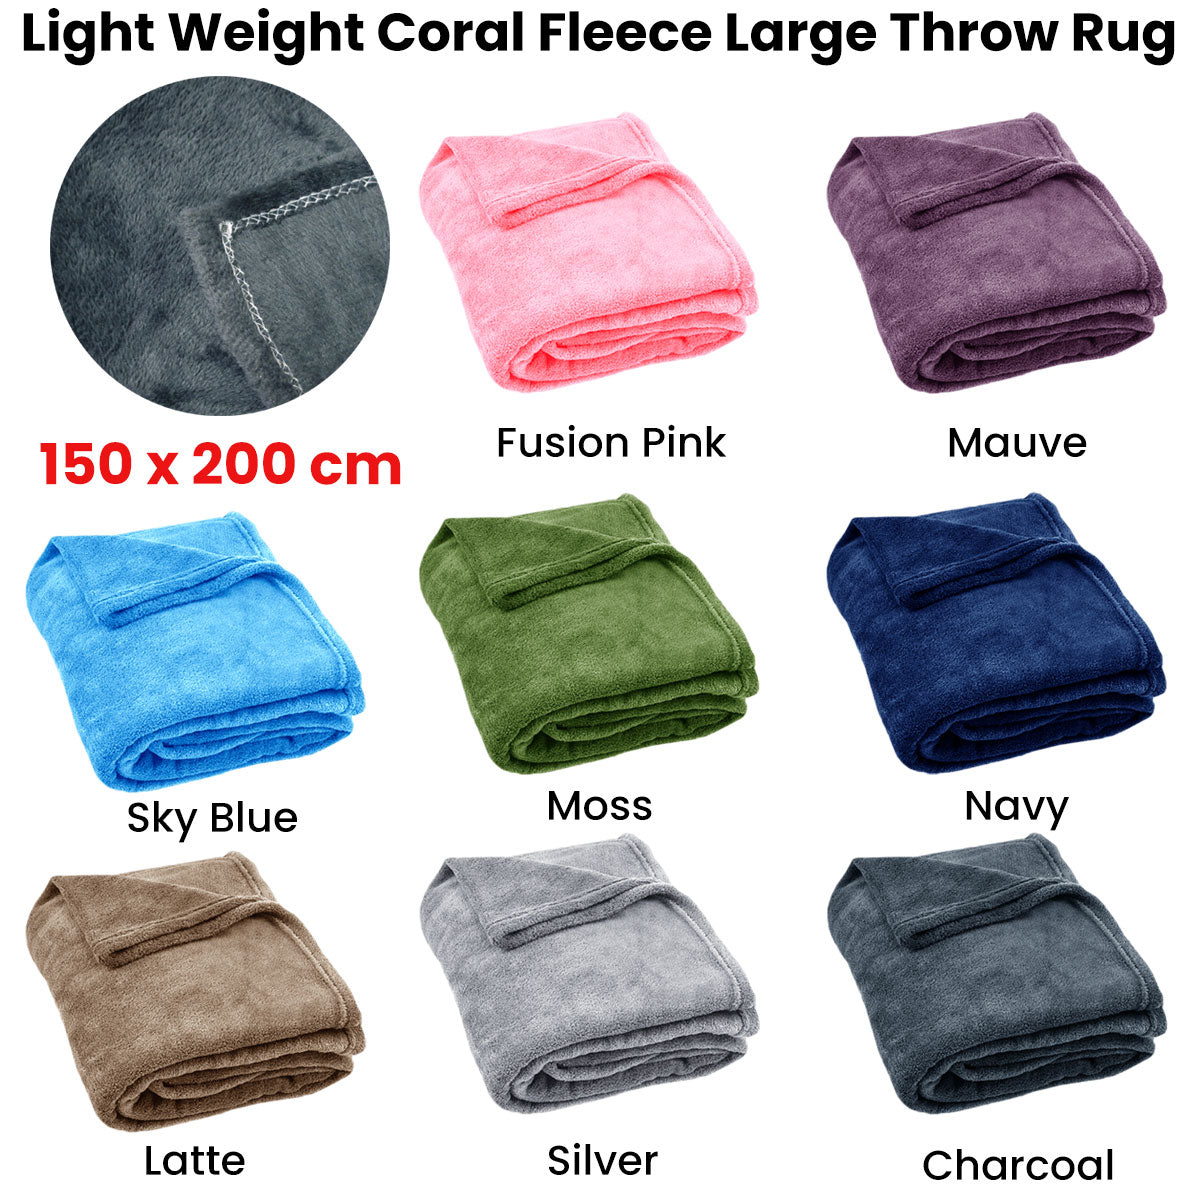 Light Weight Coral Fleece Throw Rug 150x200 cm Latte